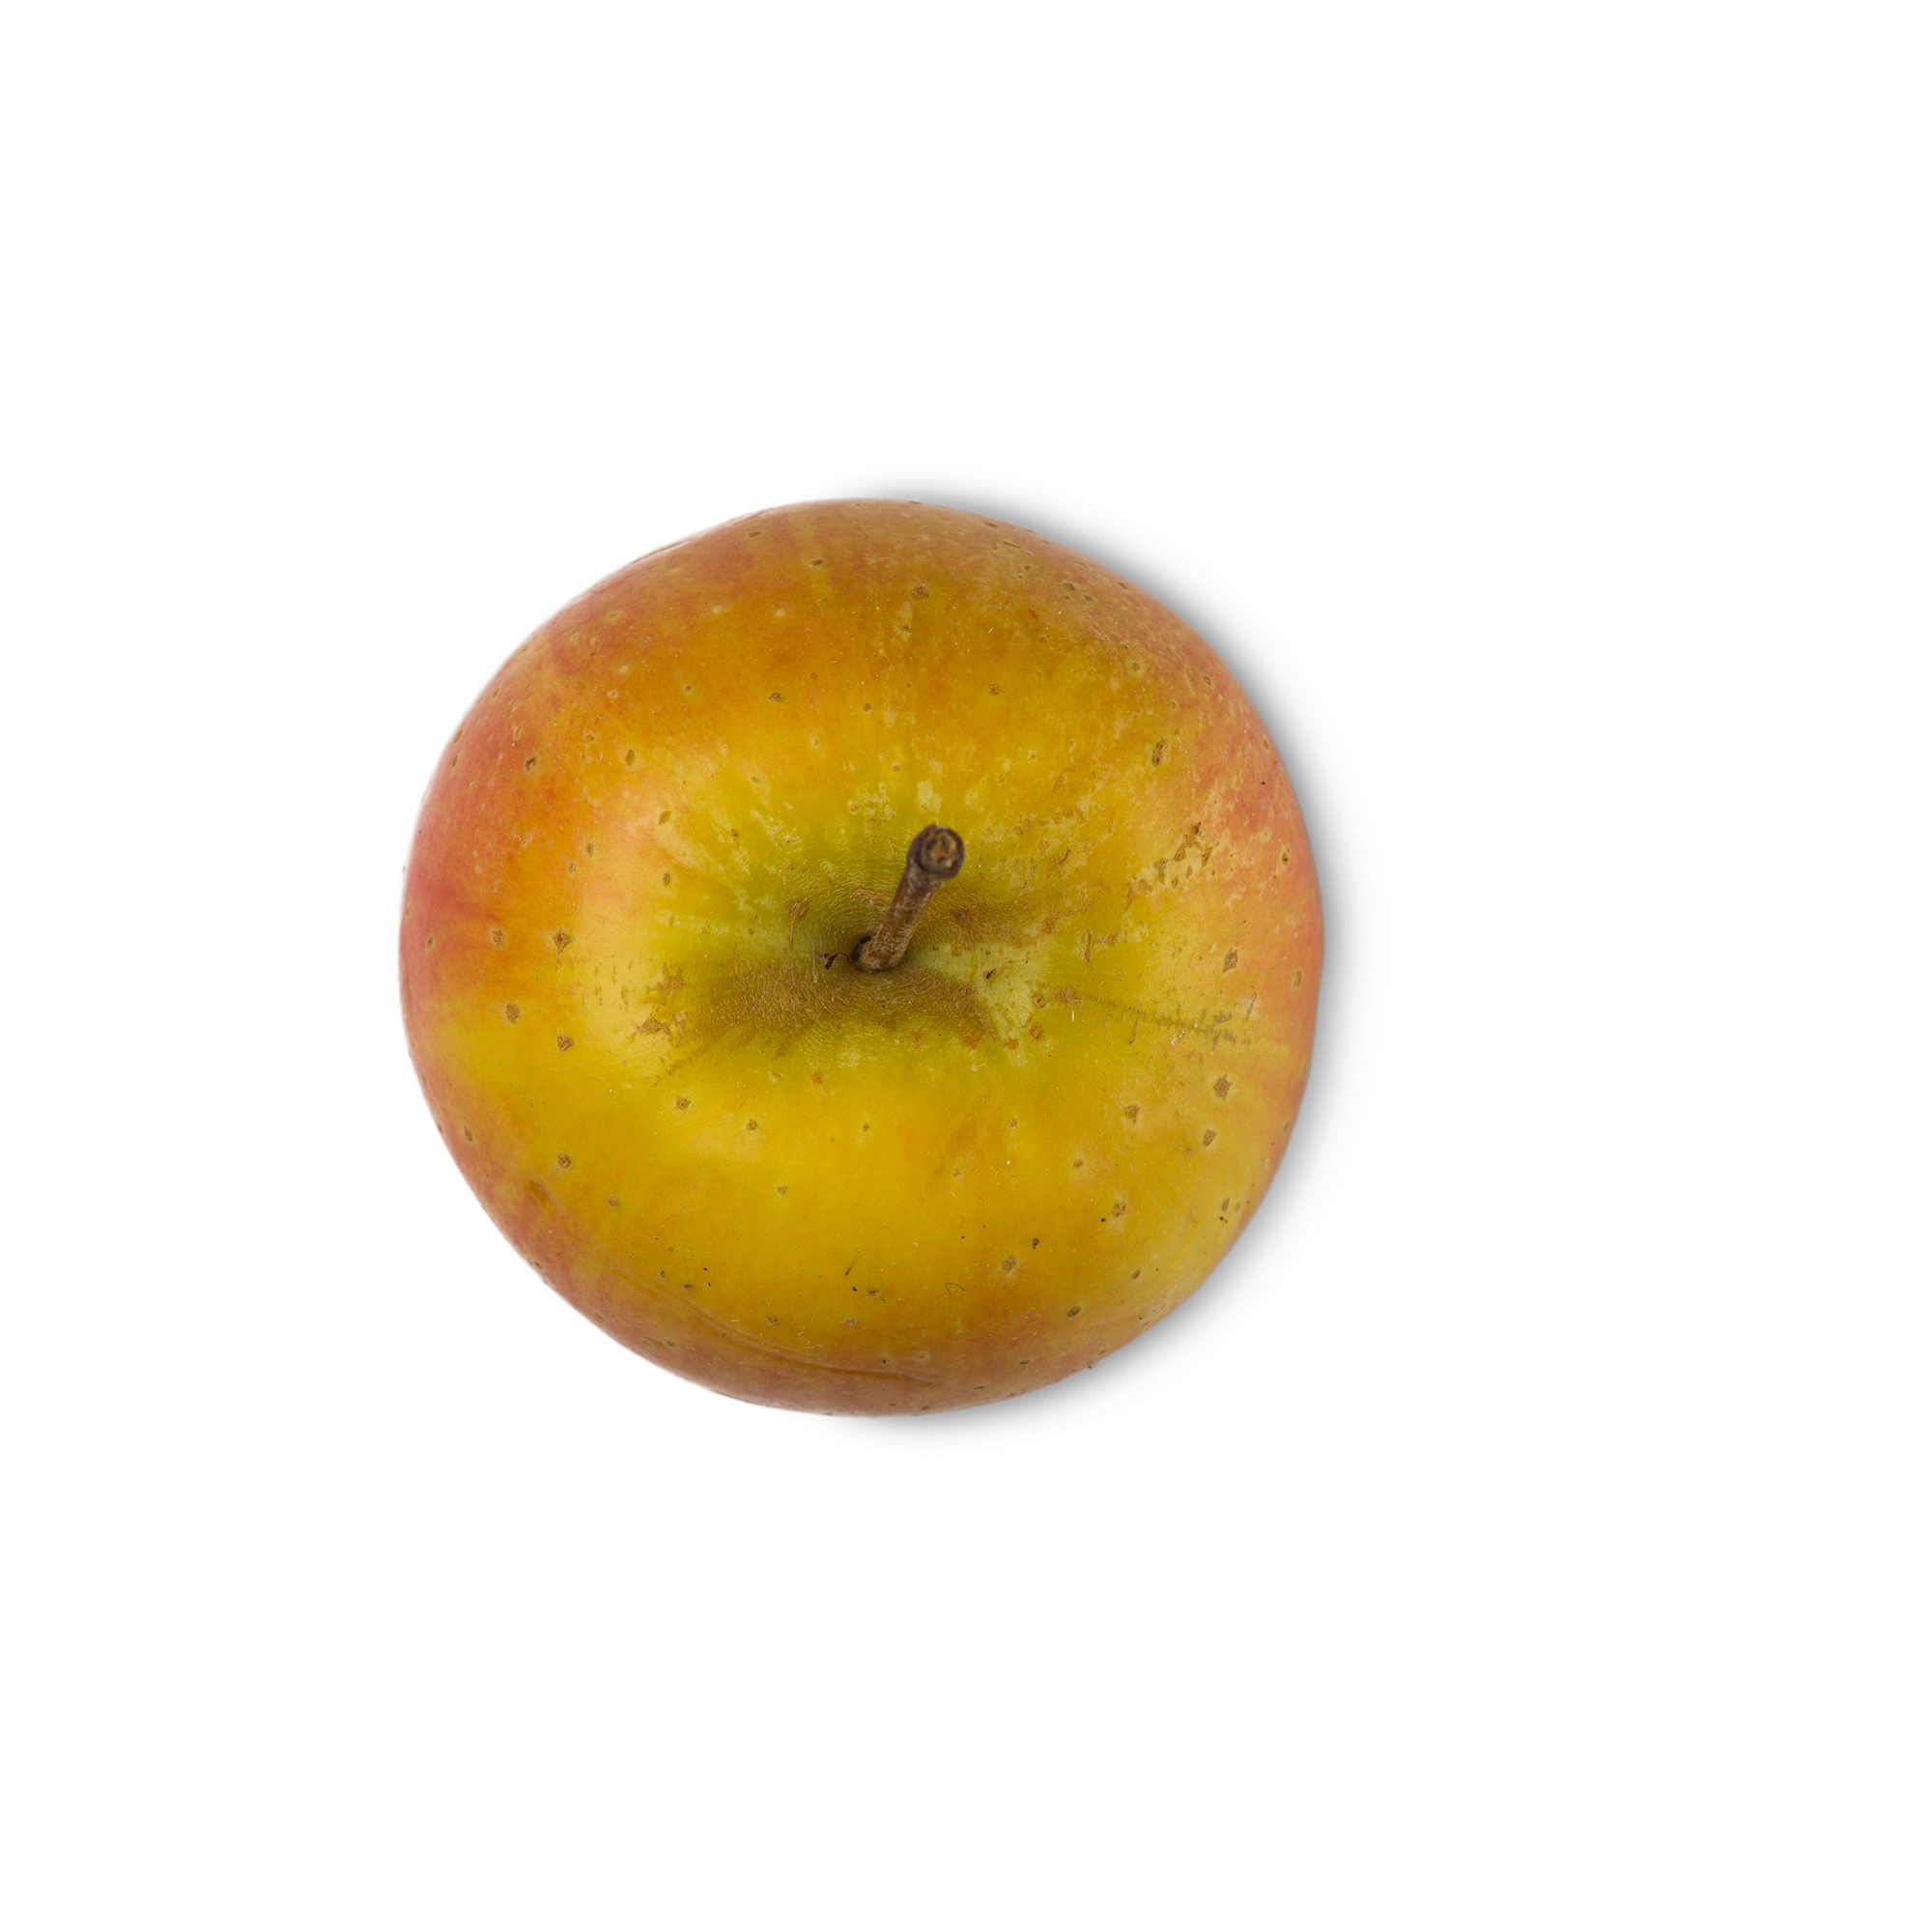 Malus Domestica Fruit Extract (Apfelpulver)